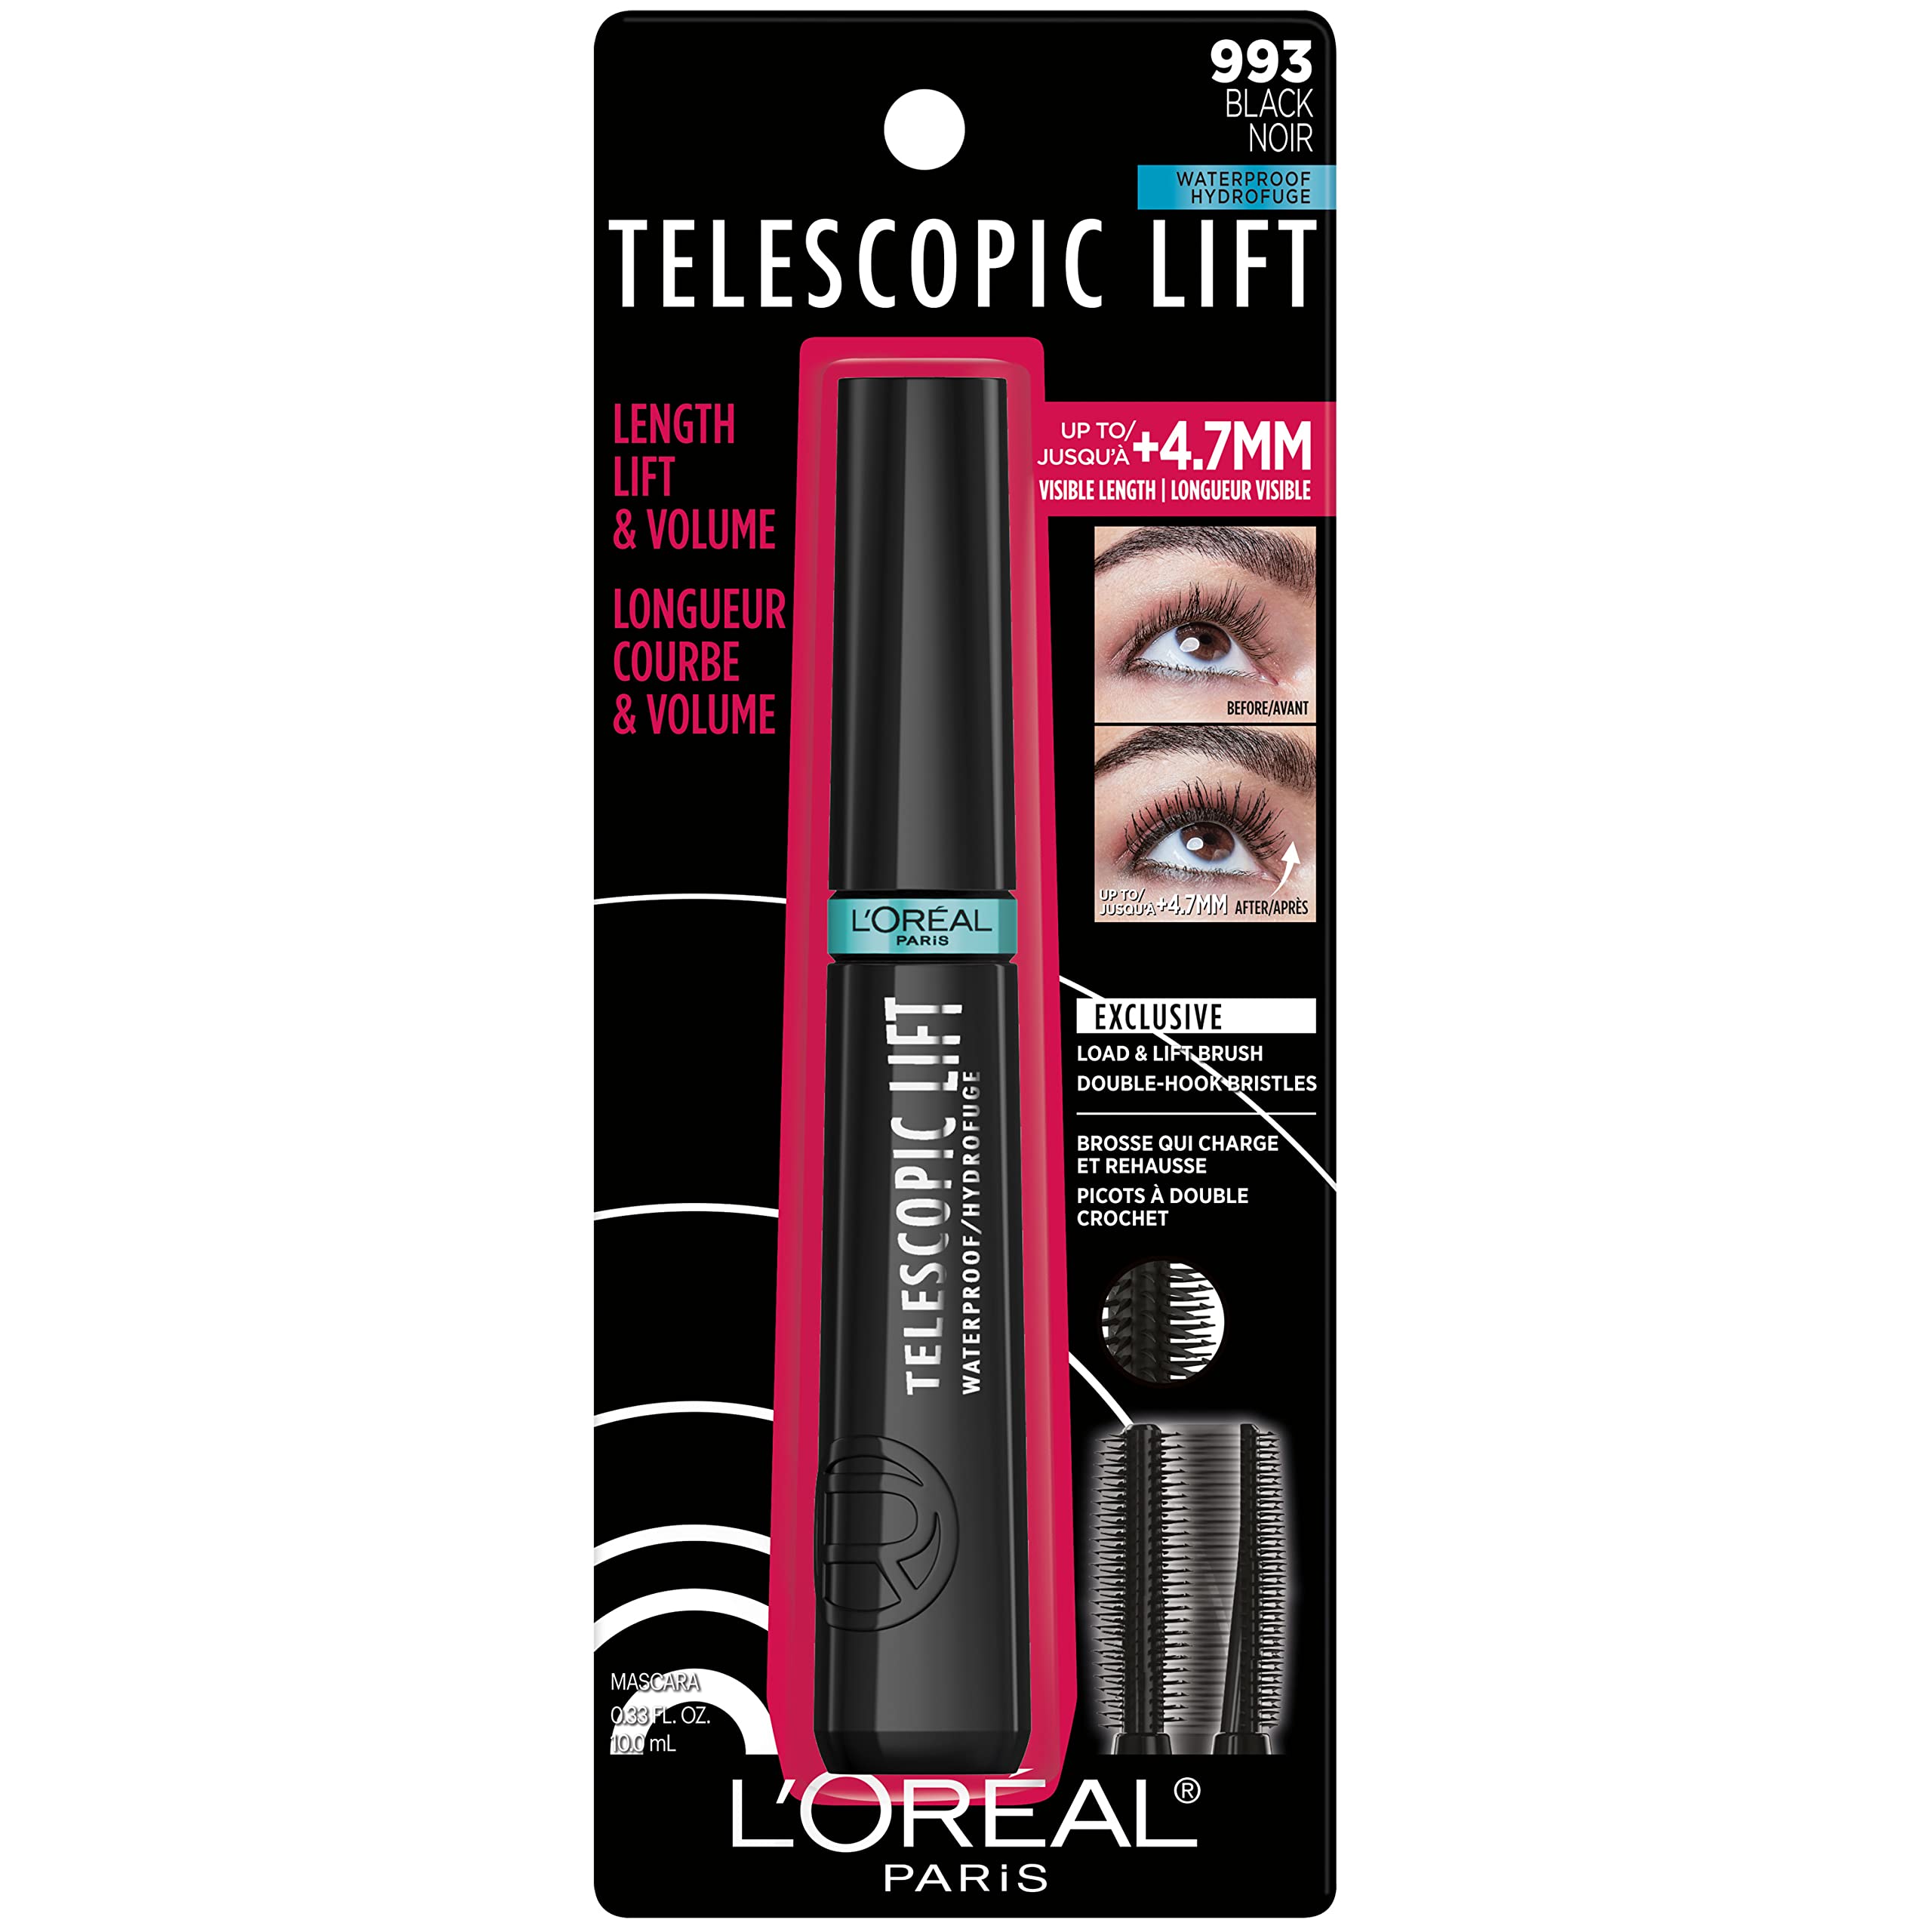 L’Oréal Paris Cosmetics Telescopic Lift Waterproof Mascara, Lengthening and Volumizing Eye Makeup, Lash Lift with Up to 36HR Wear, Black, 0.33 Fl Oz